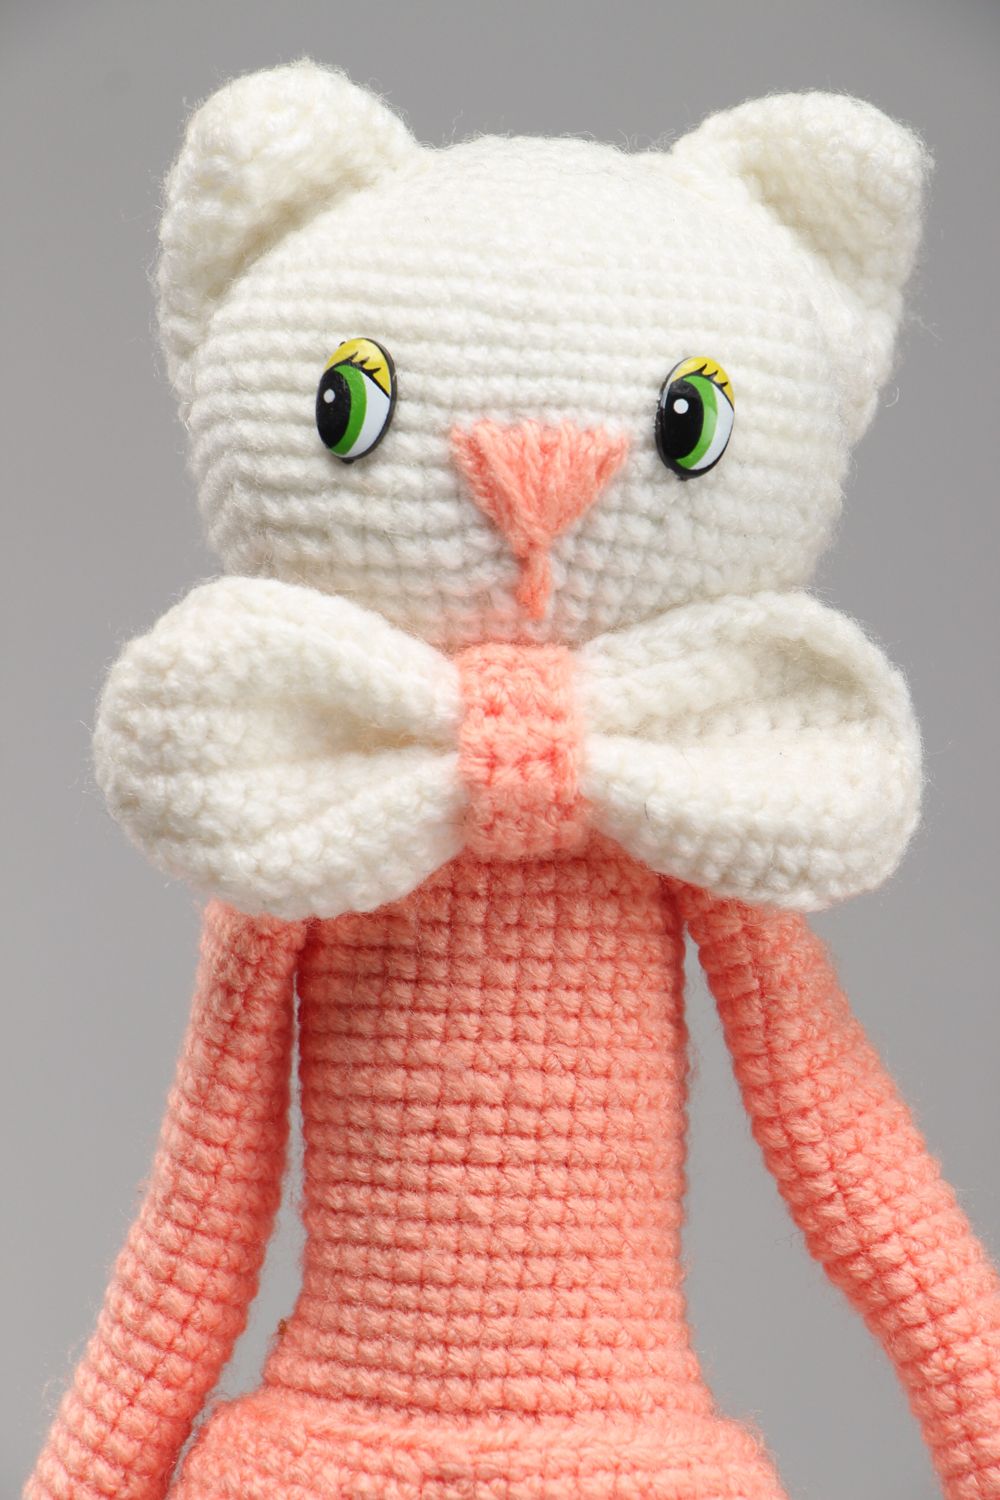 Soft crochet amigurumi toy Kitty photo 2